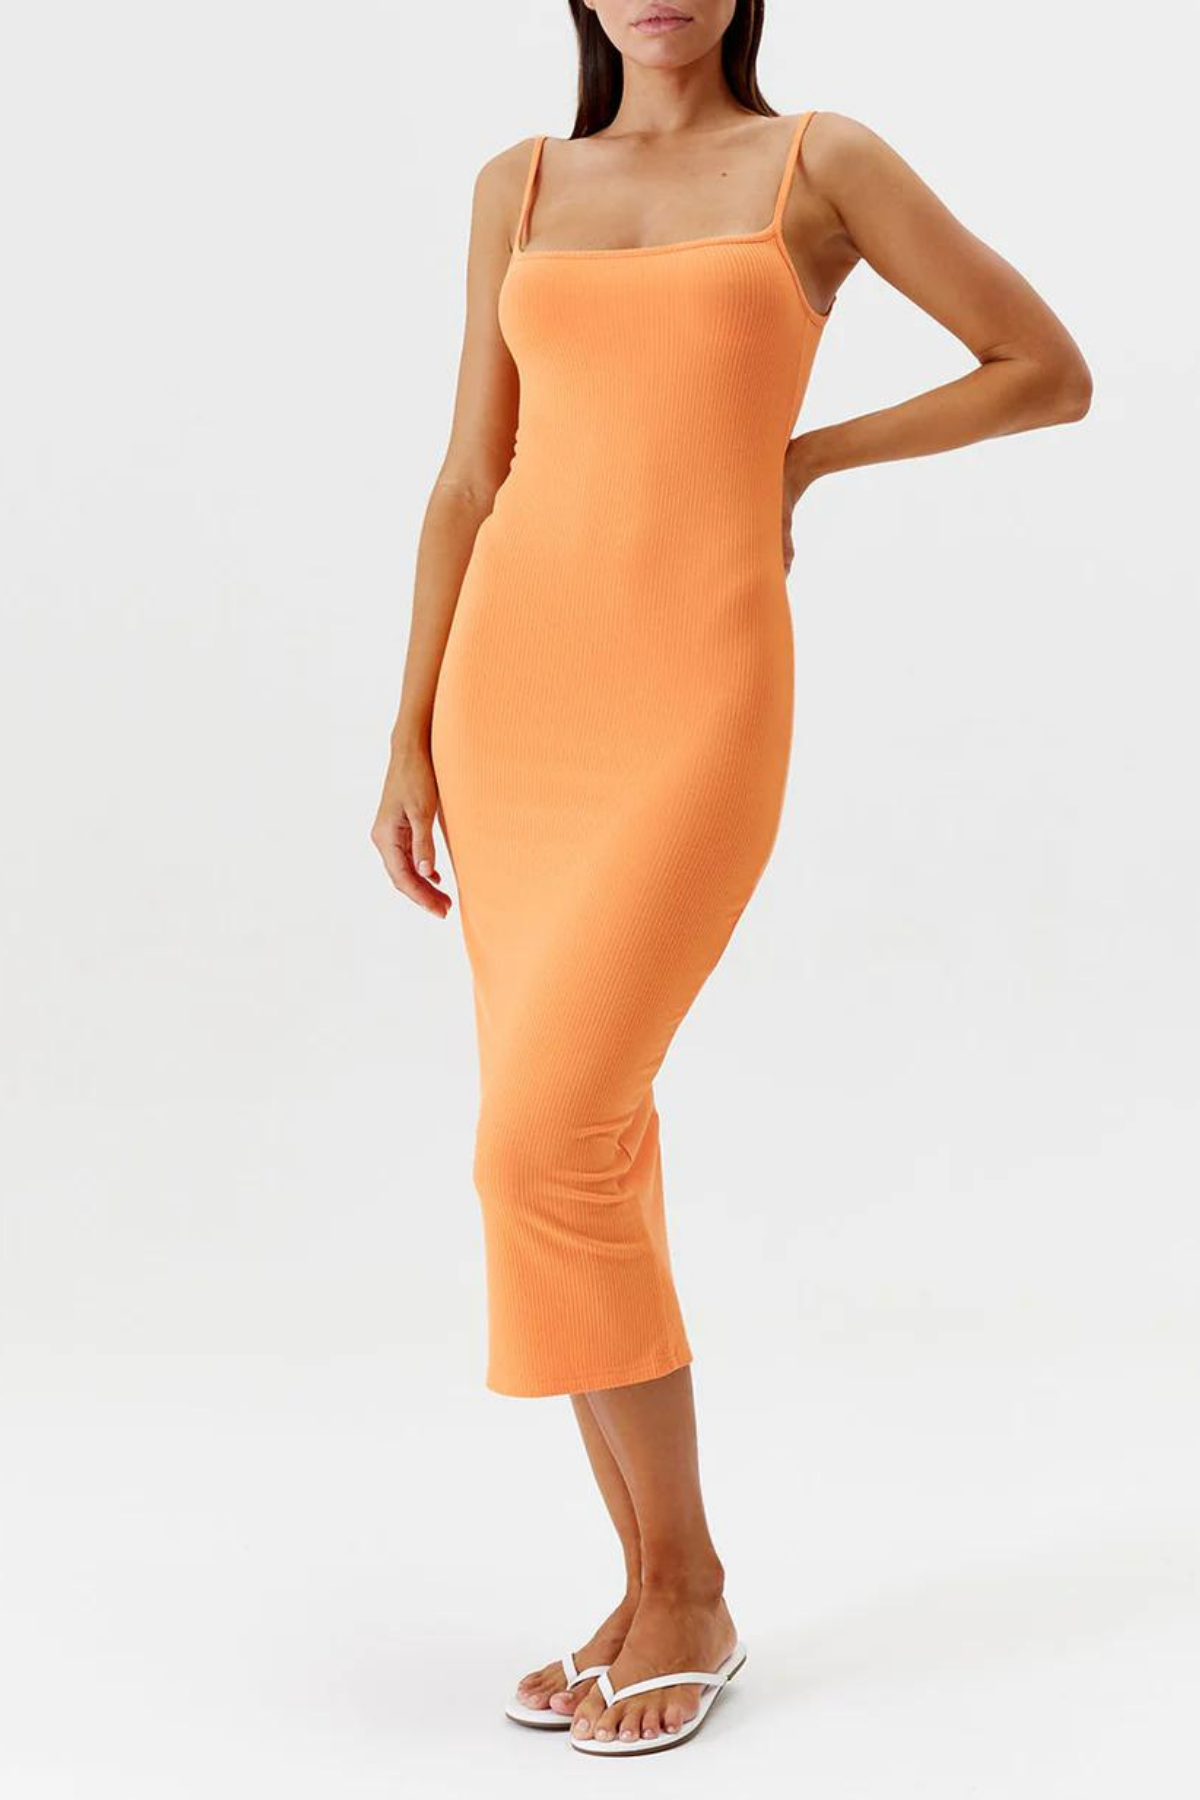 Melissa Odabash Riley Orange Dress